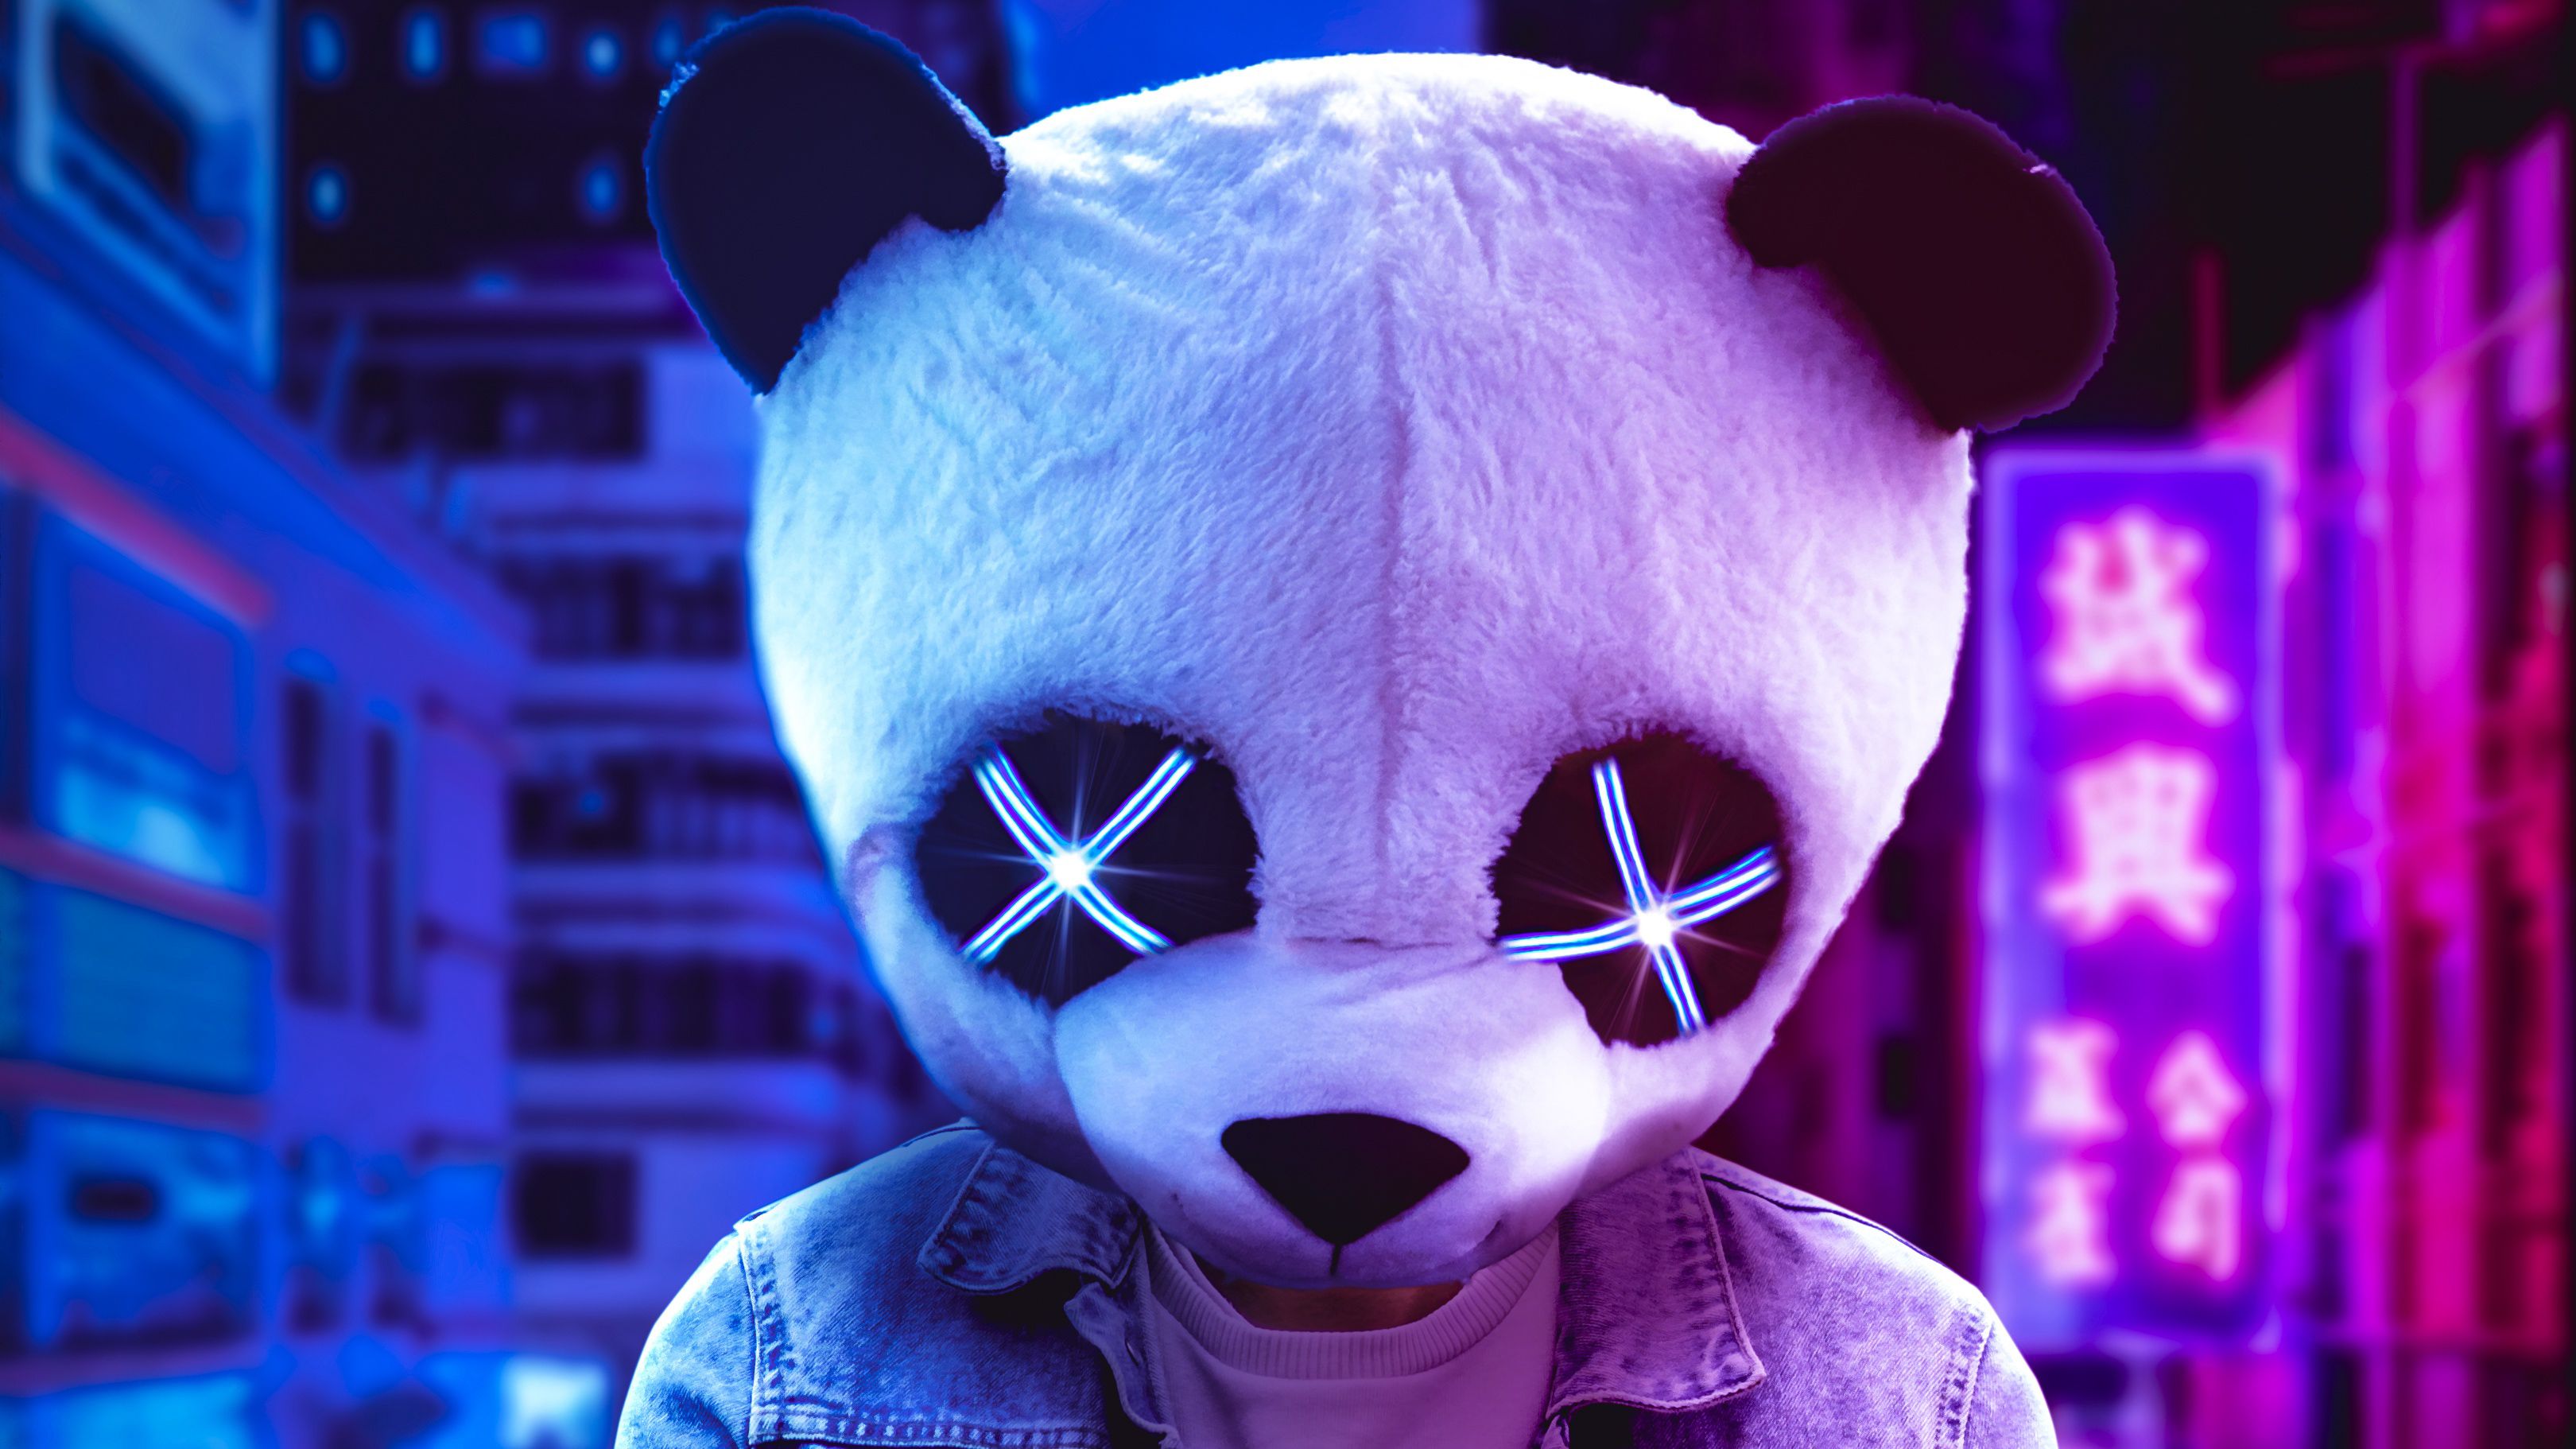 Panda Art 4k, HD Artist, 4k Wallpaper, Image, Background, Photo and Picture